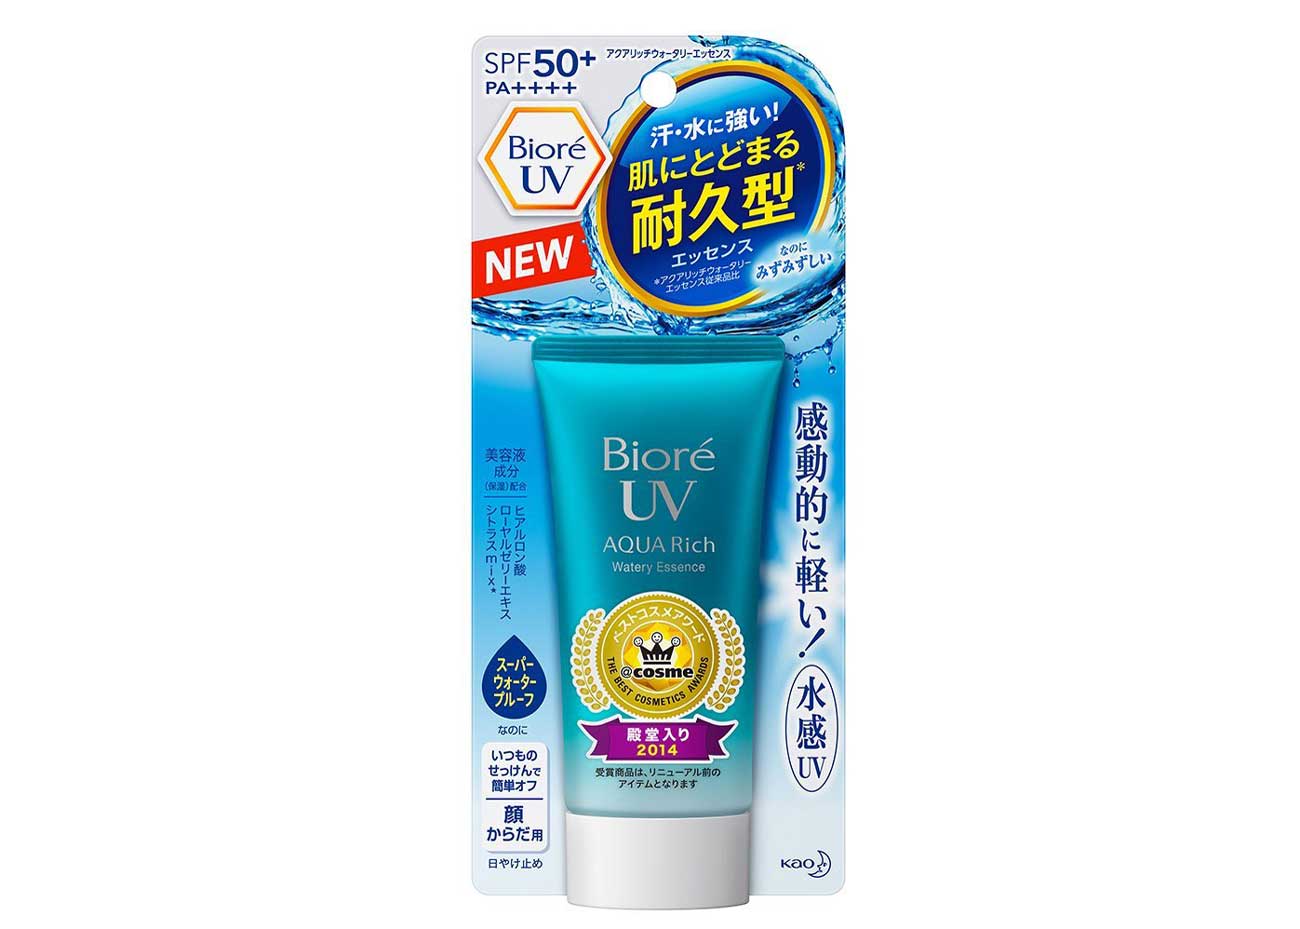 Essence 50 spf. Biore эссенция UV Aqua Rich SPF 50. Биоре солнцезащитный крем SPF 50. Watery Essence by Bioré (SPF 50 + / pa++++). Солнцезащитный крем для лица японский.